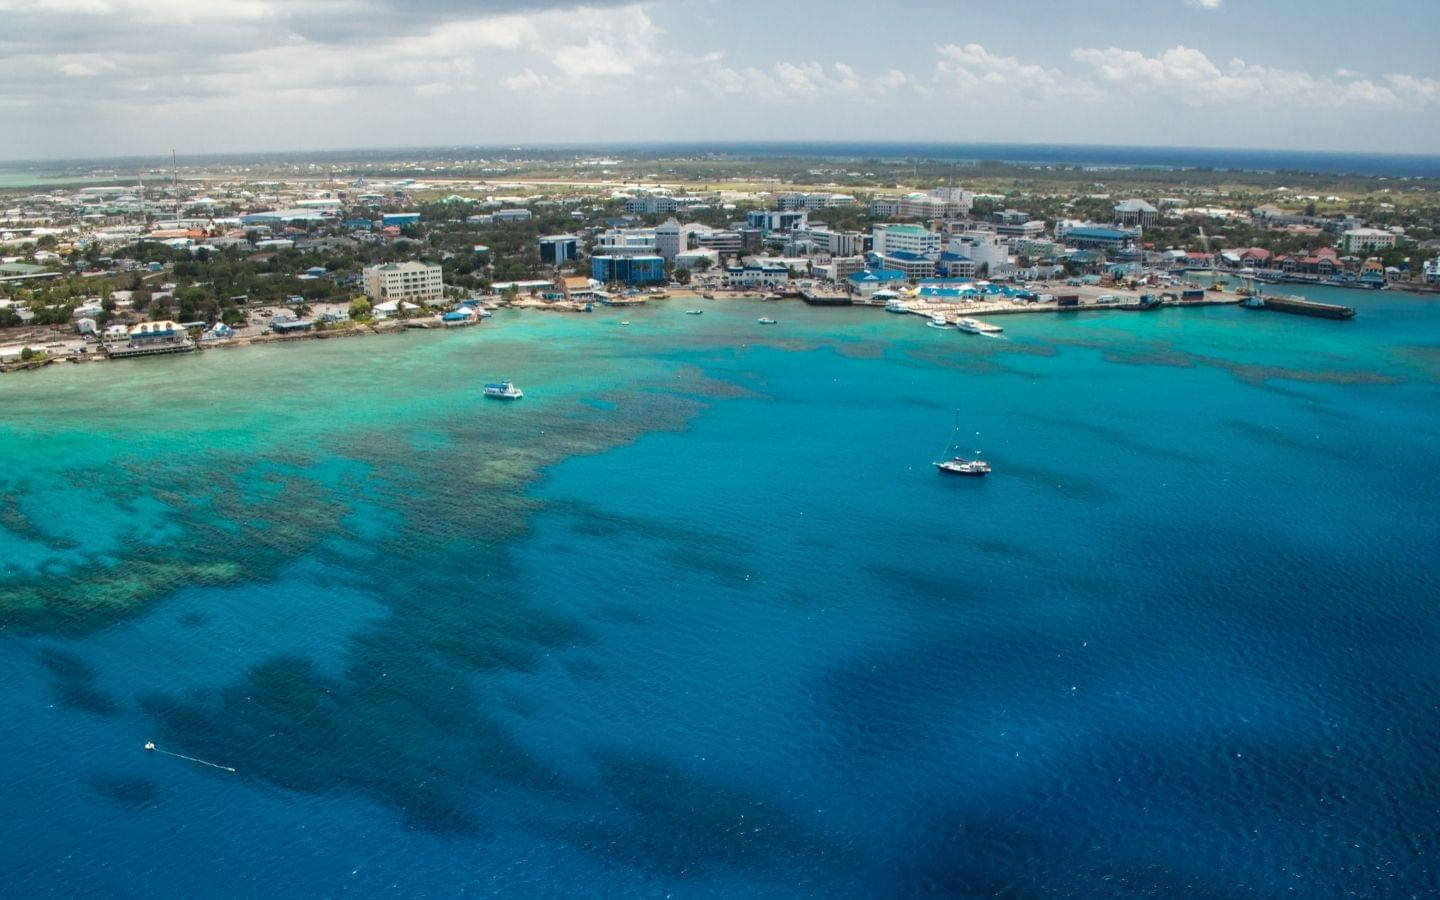 Cayman Island Bloody Bay Port Background